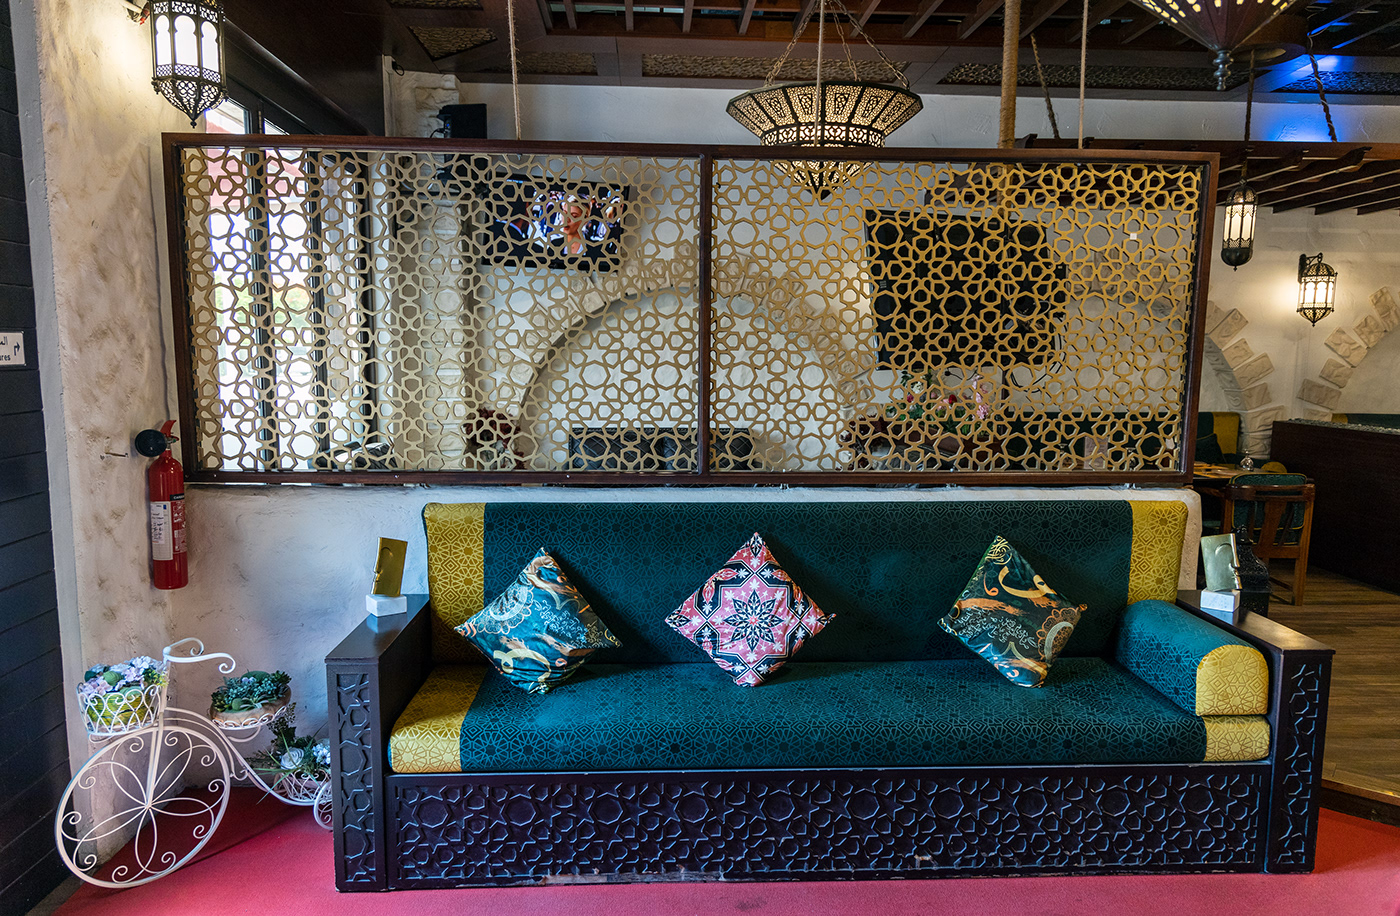 archirecture cafe exterior Interior interior design  photographer Photography  photoshoot restaurant UAE